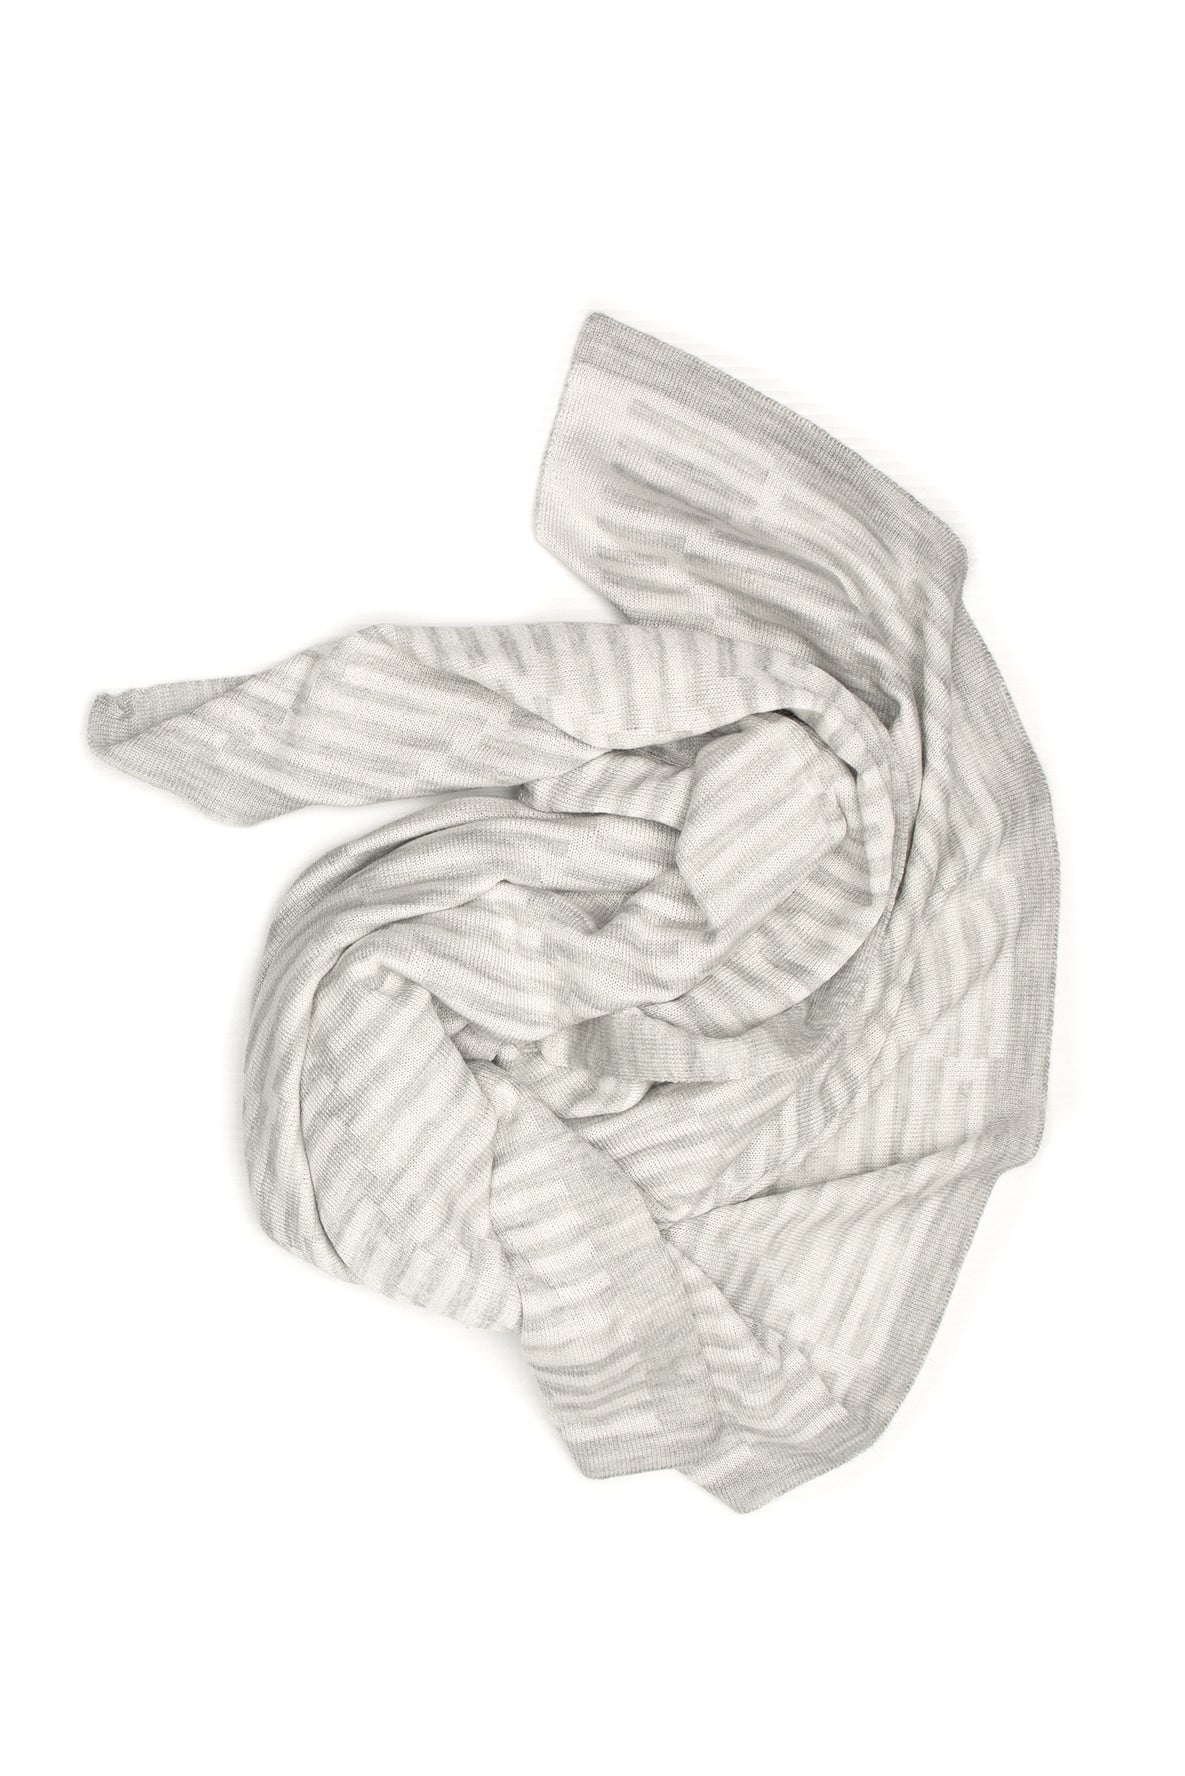 Silk Merino White Chevron Baby Blanket